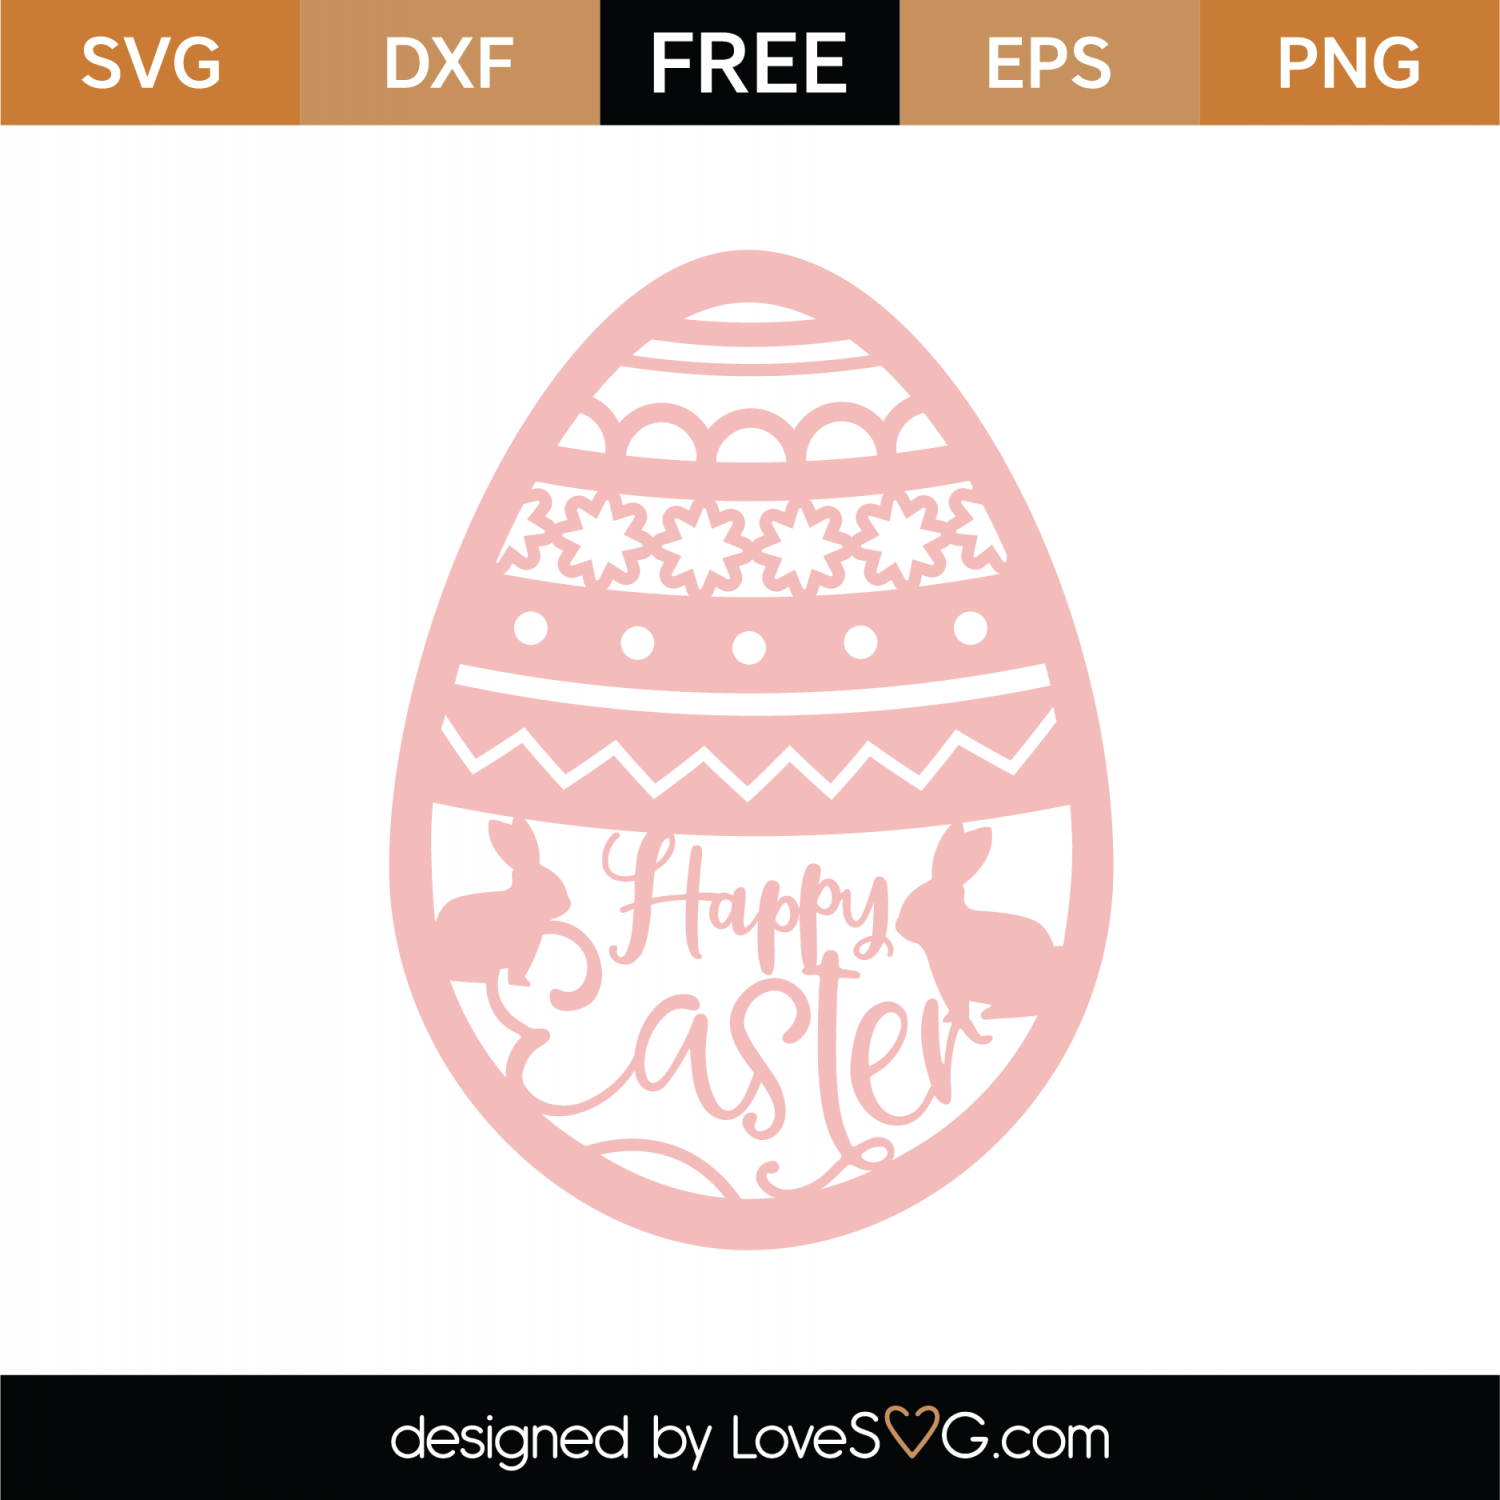 Free Happy Easter Egg SVG Cut File | Lovesvg.com